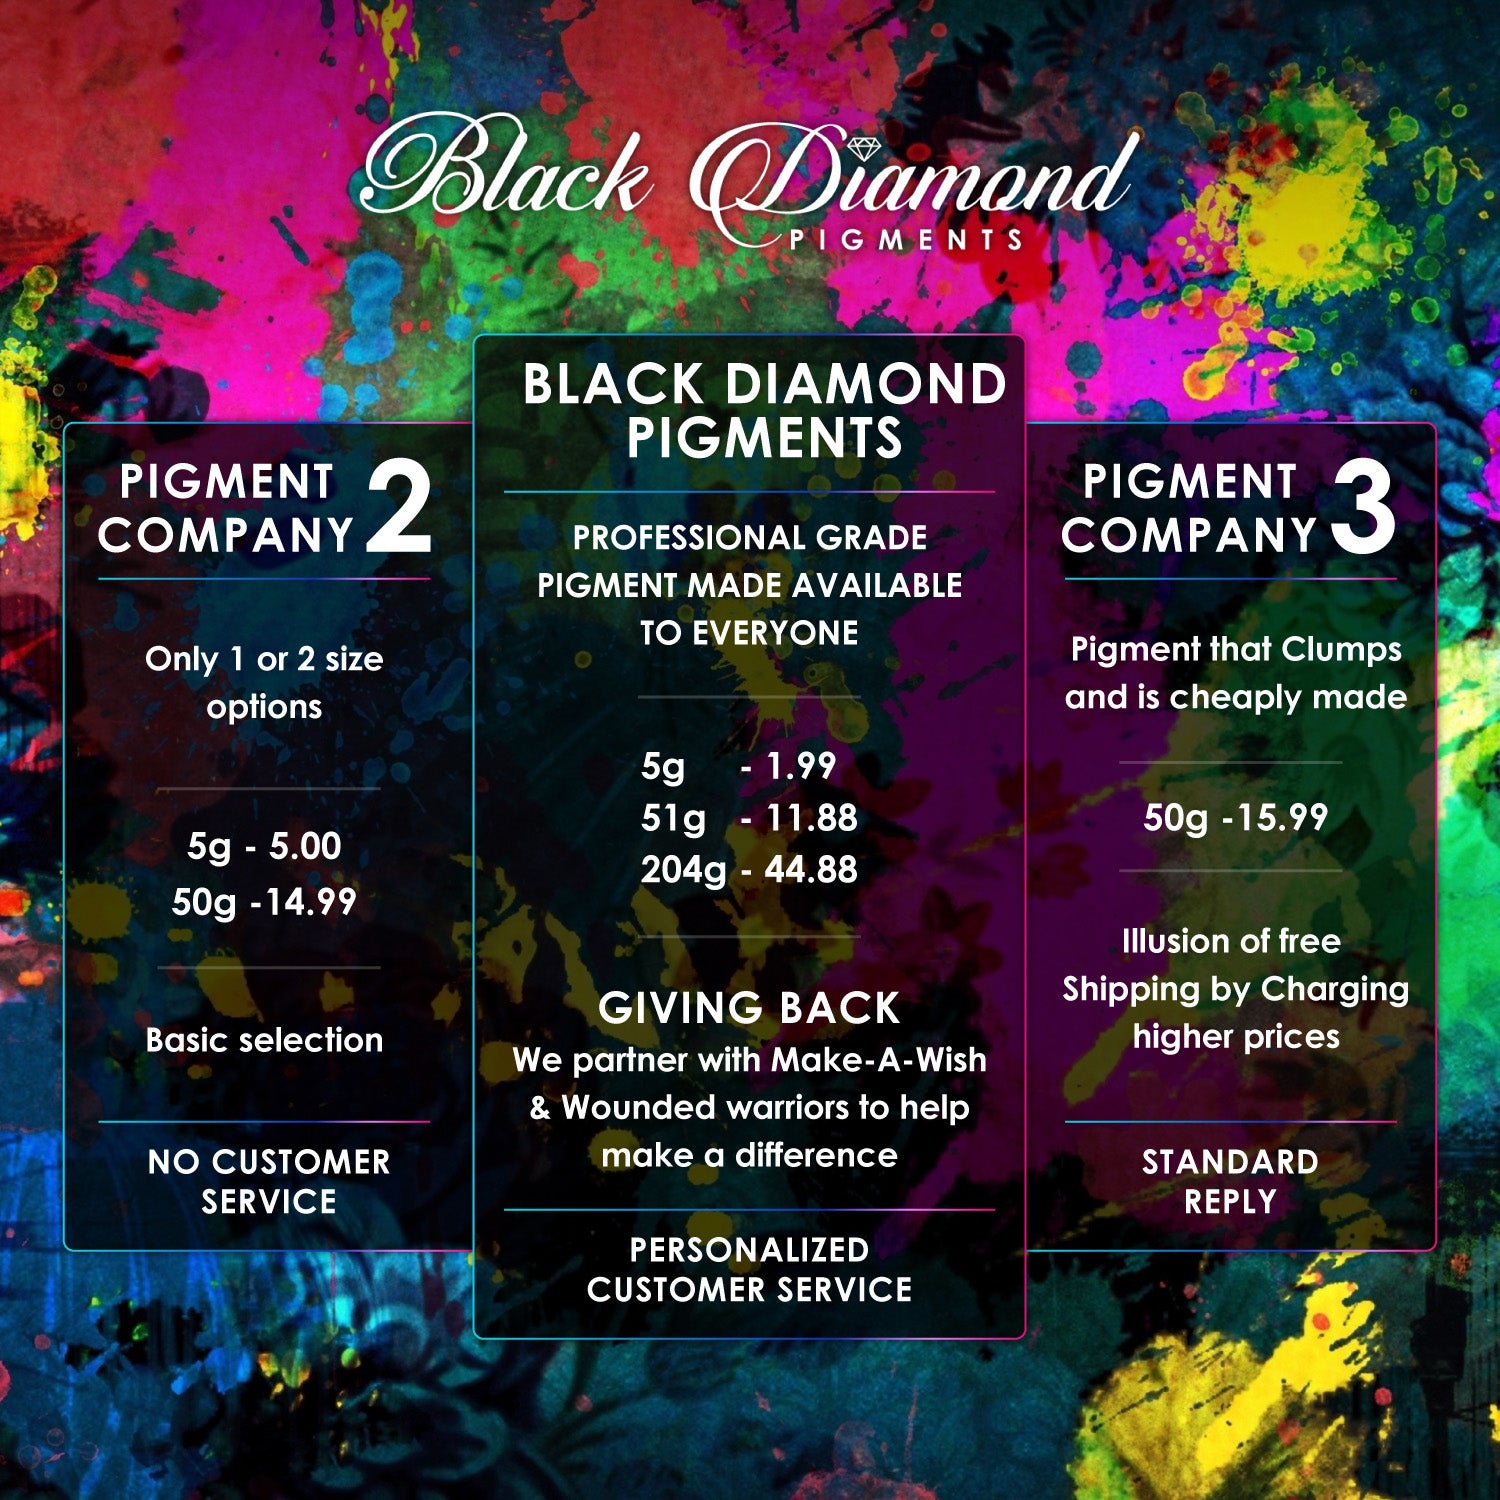 "VULCAN'S FORGE" Black Diamond Pigments